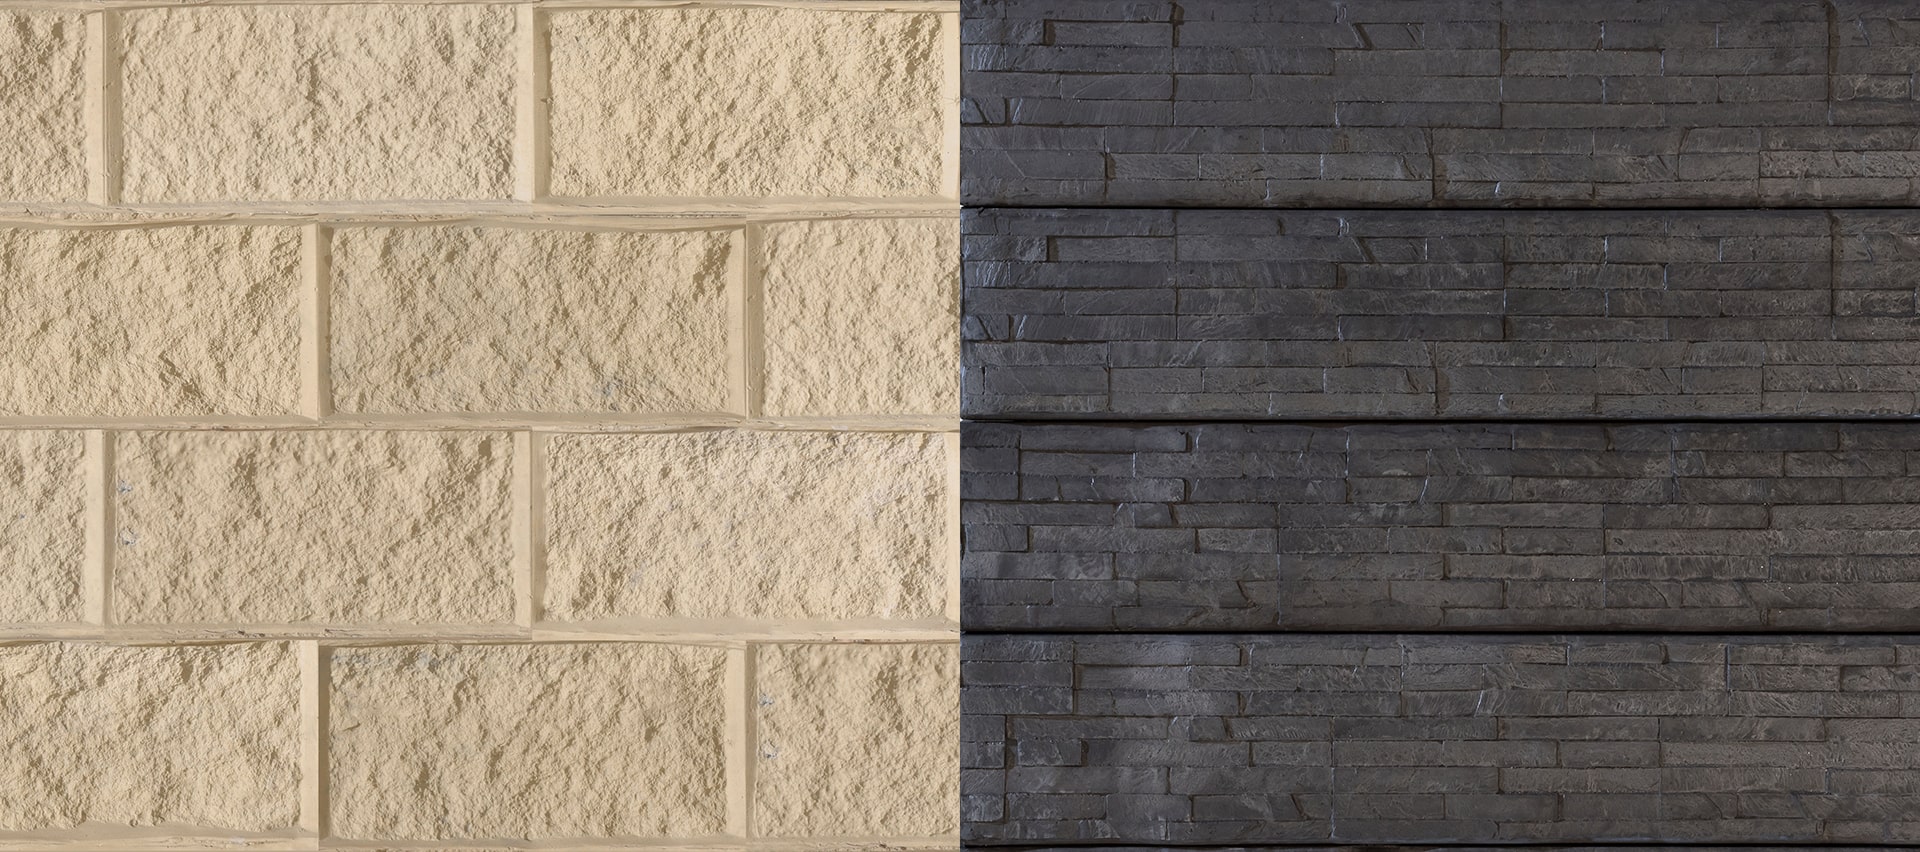 Retaining Wall Textures Min 